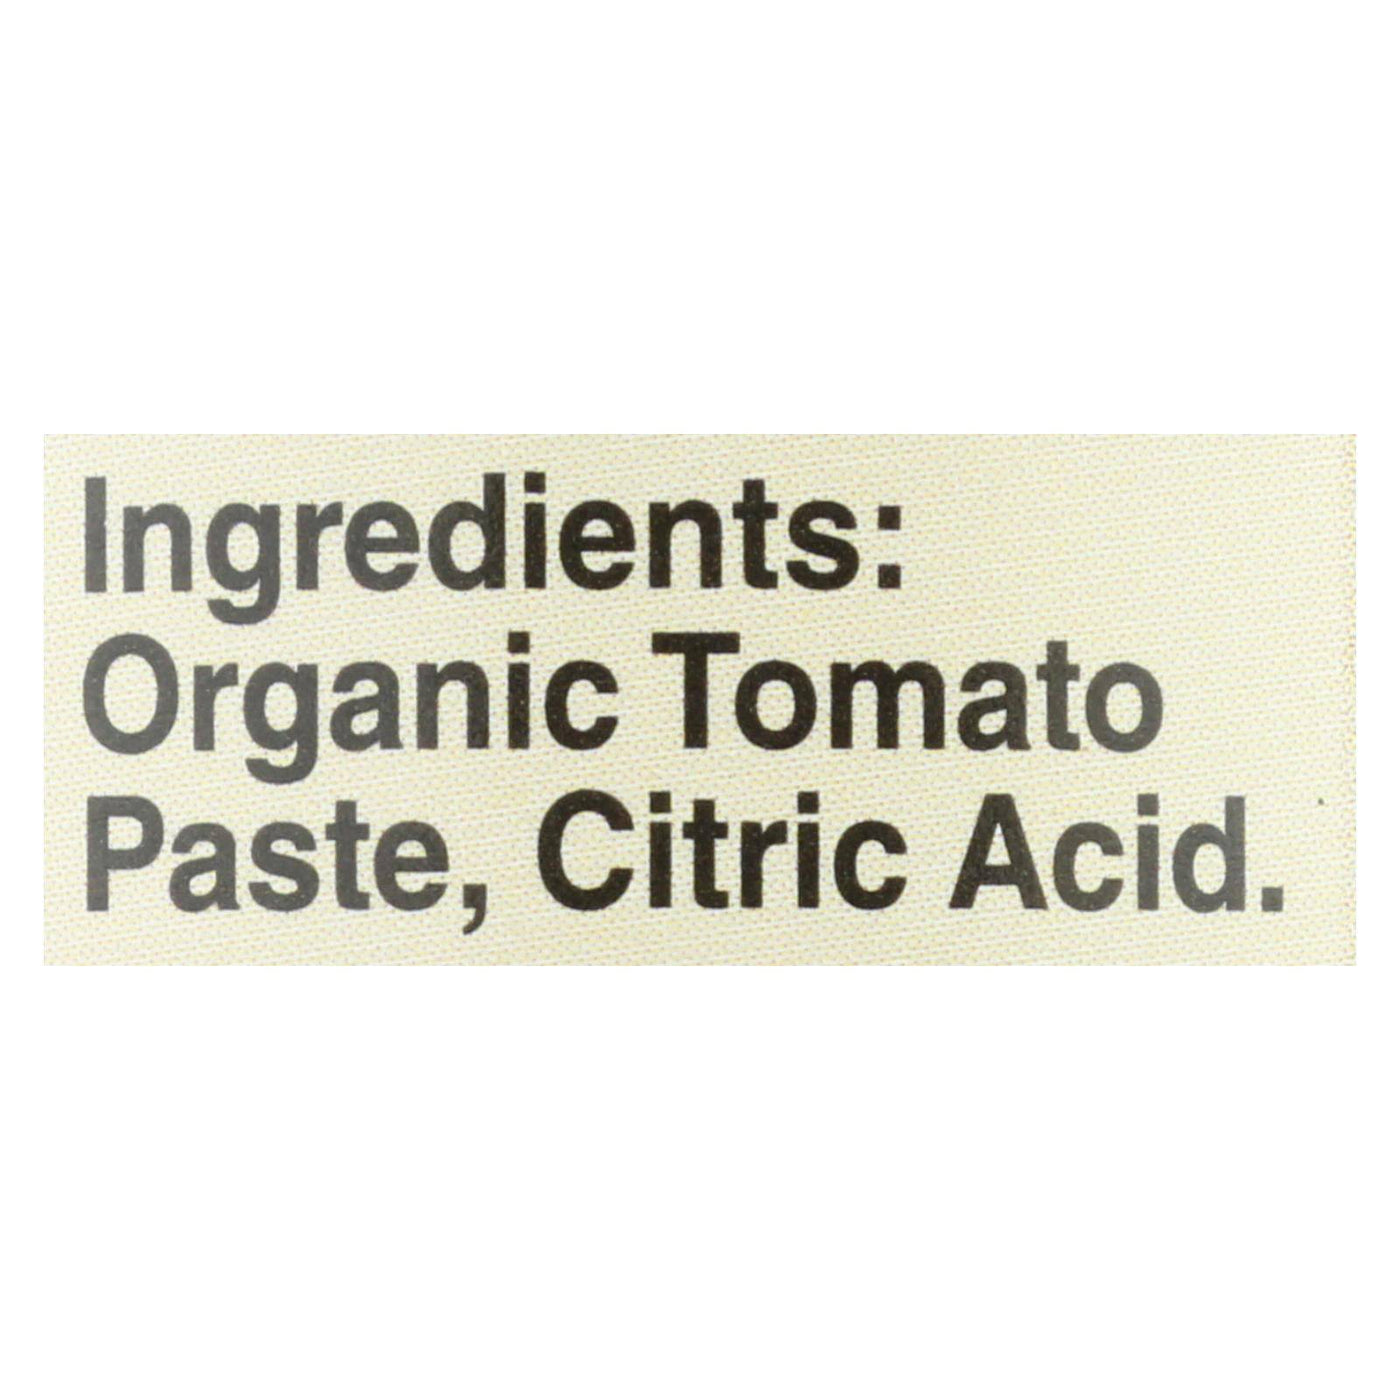 Buy Muir Glen Muir Glen Tomato Paste - Tomato - Case Of 24 - 6 Oz.  at OnlyNaturals.us